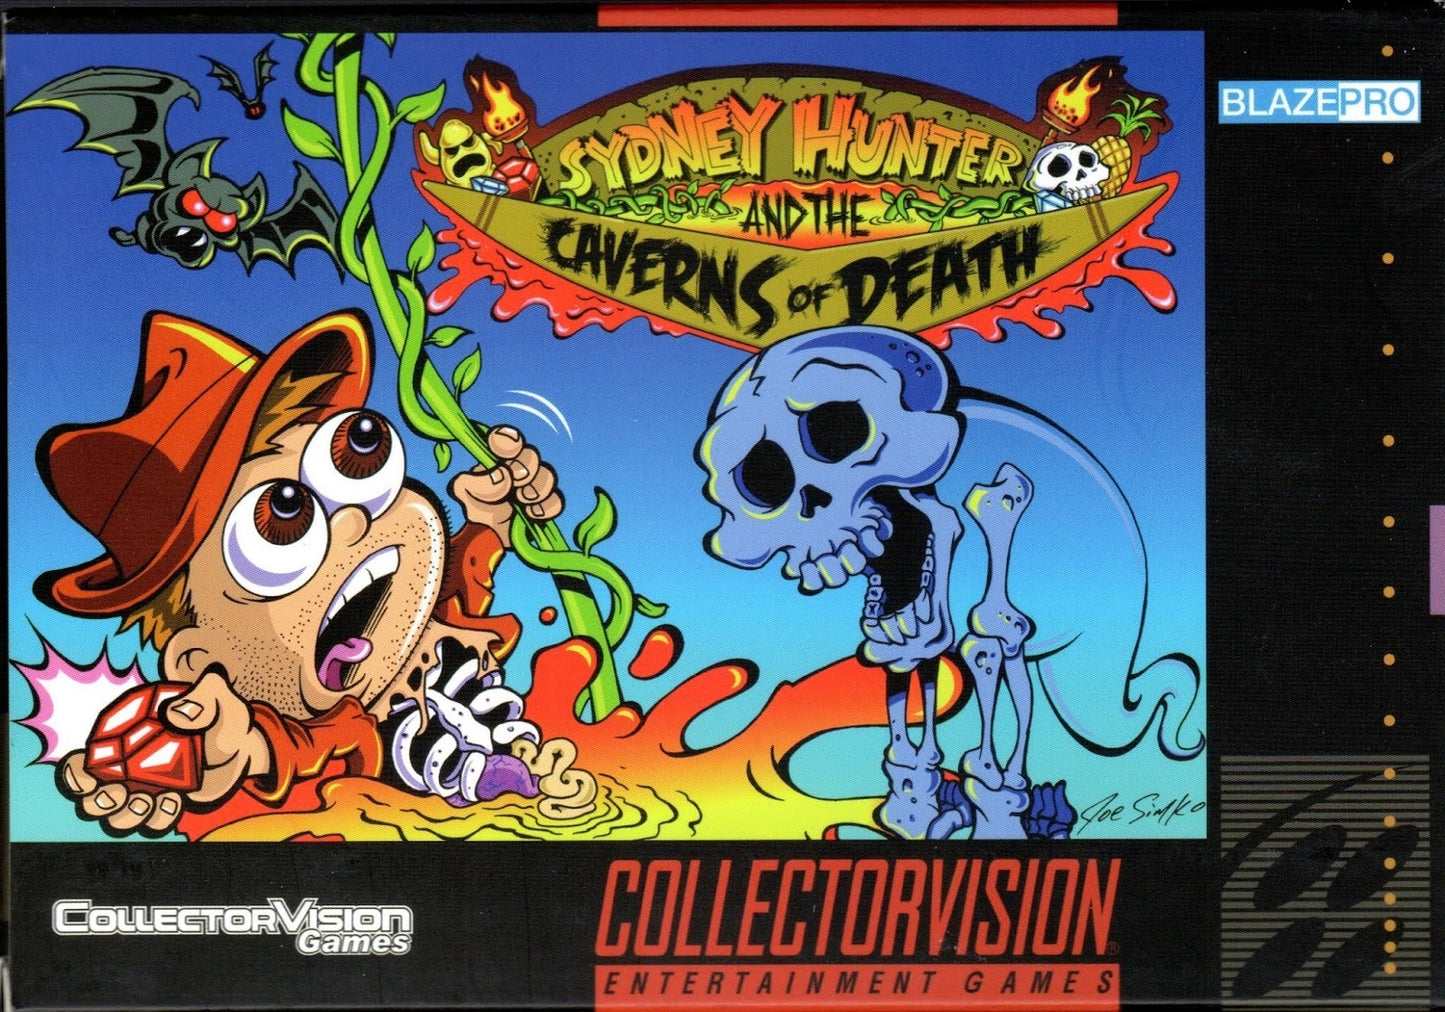 Sydney Hunter and the Caverns of Death (Super Nintendo)